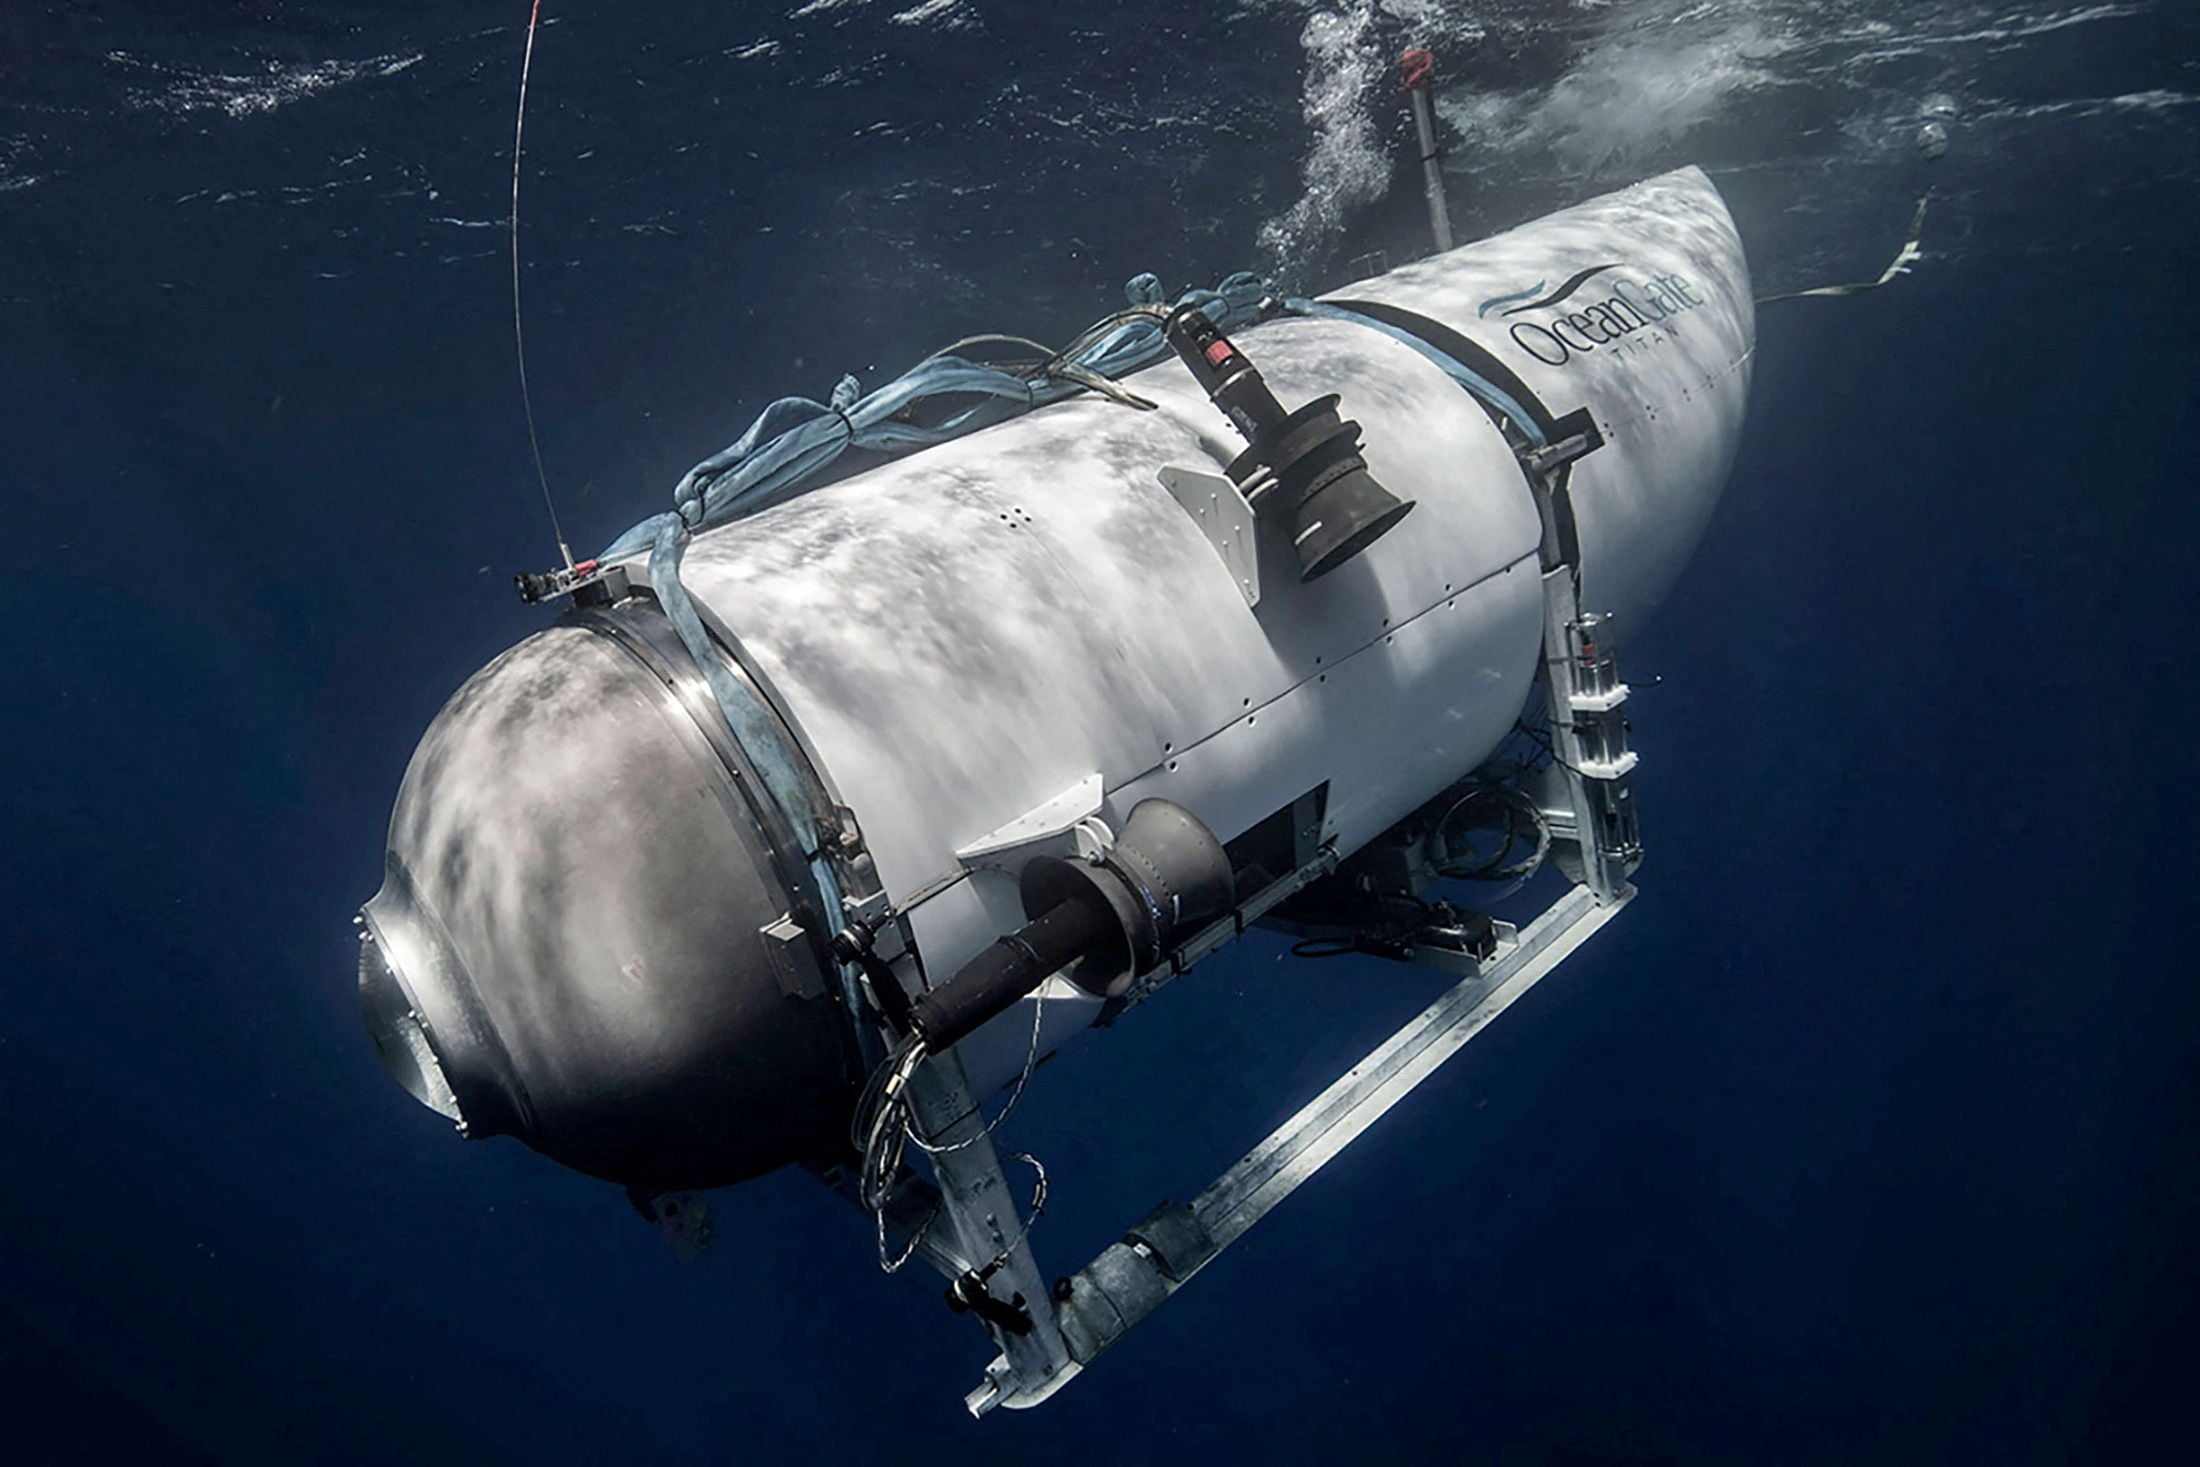 Titan submersible plunged into exotic, dangerous world on way to Titanic -  The Washington Post